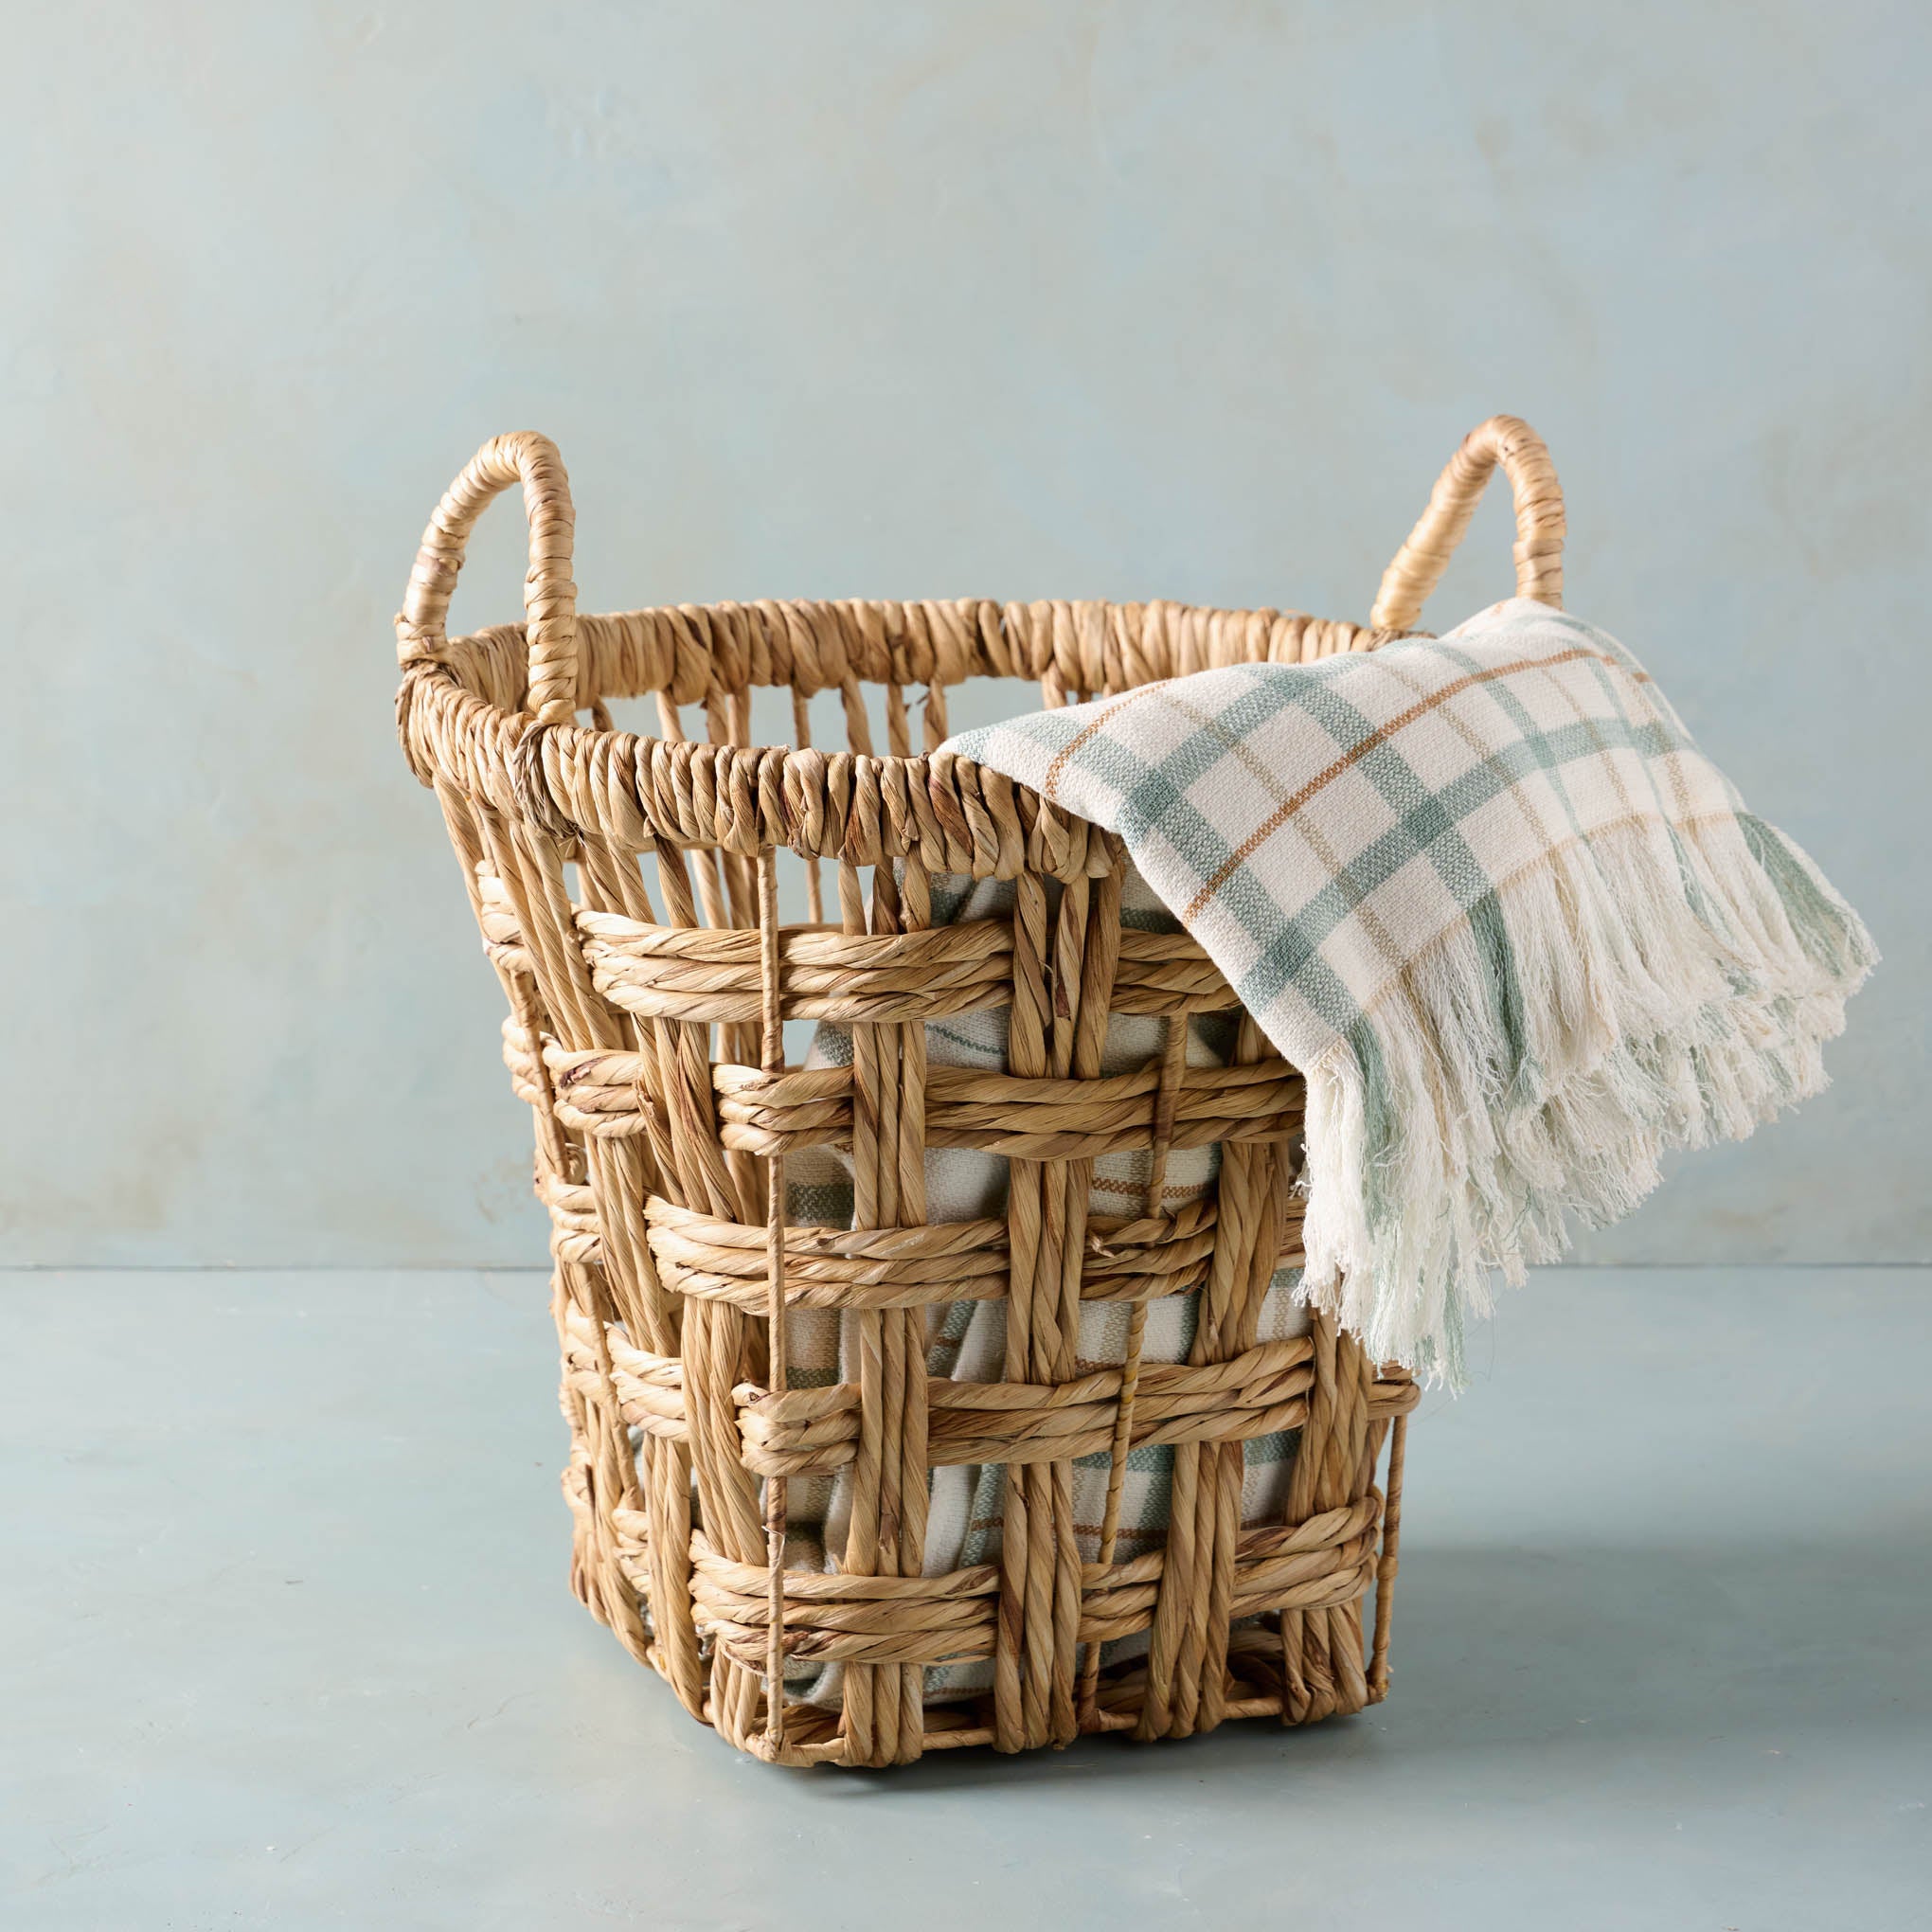 Morgan Water Hyacinth Basket with plaid throw blanket inside